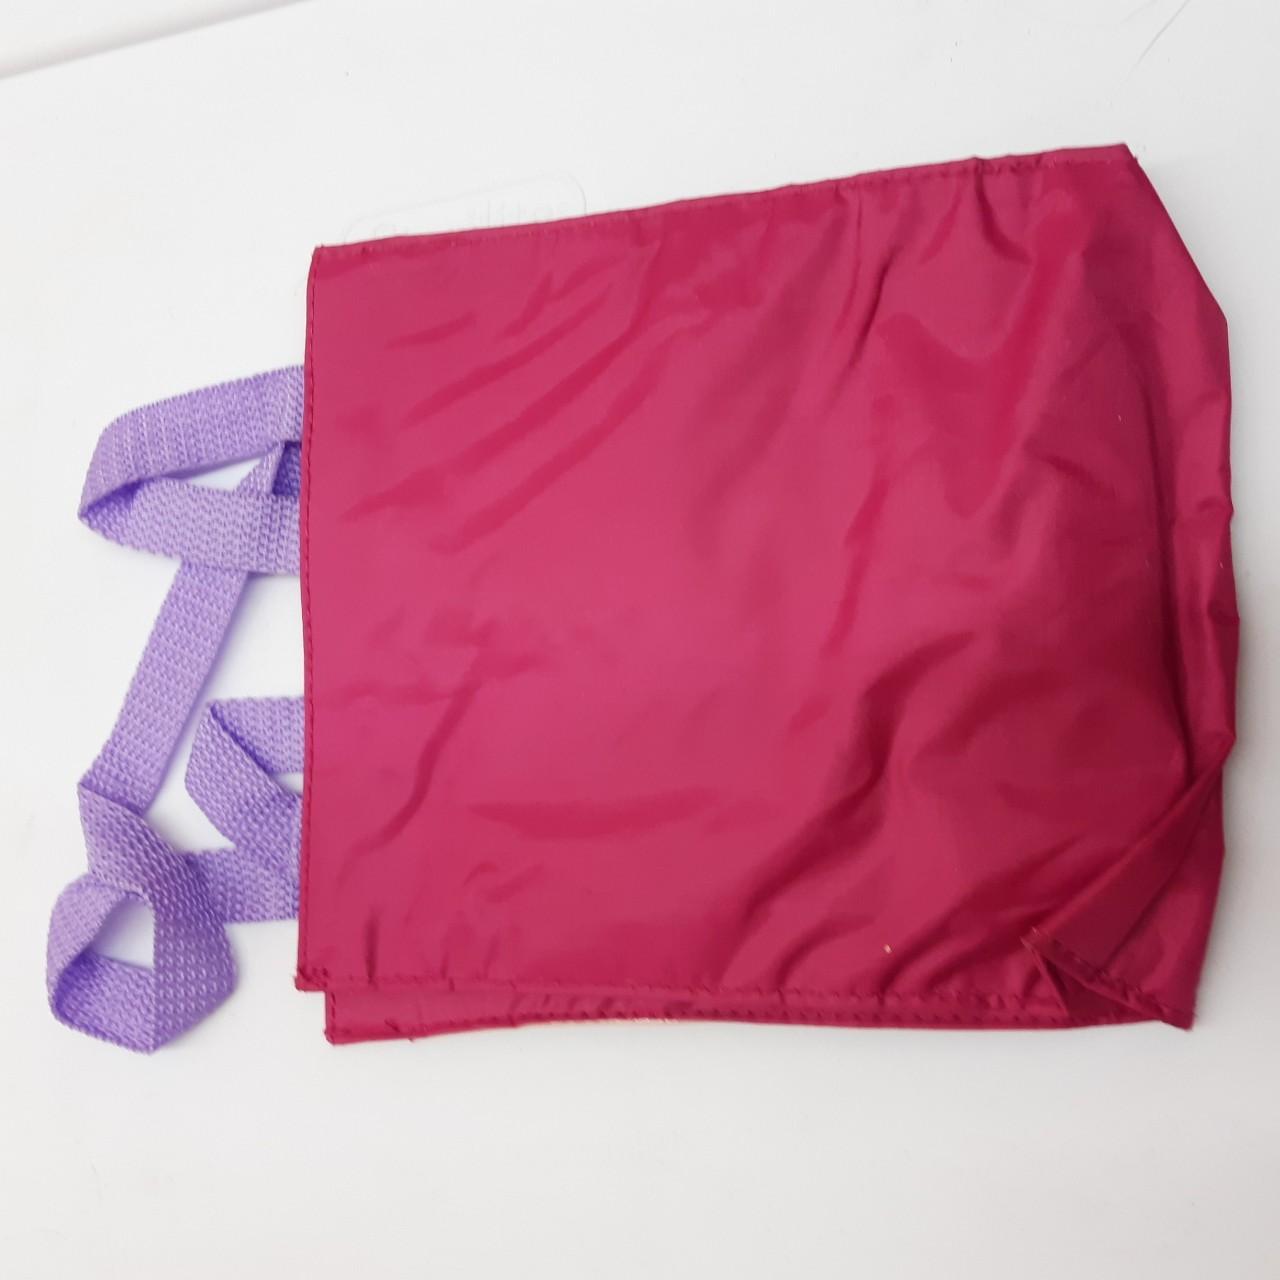 Aloye Women's Pink and Blue Bag (3)